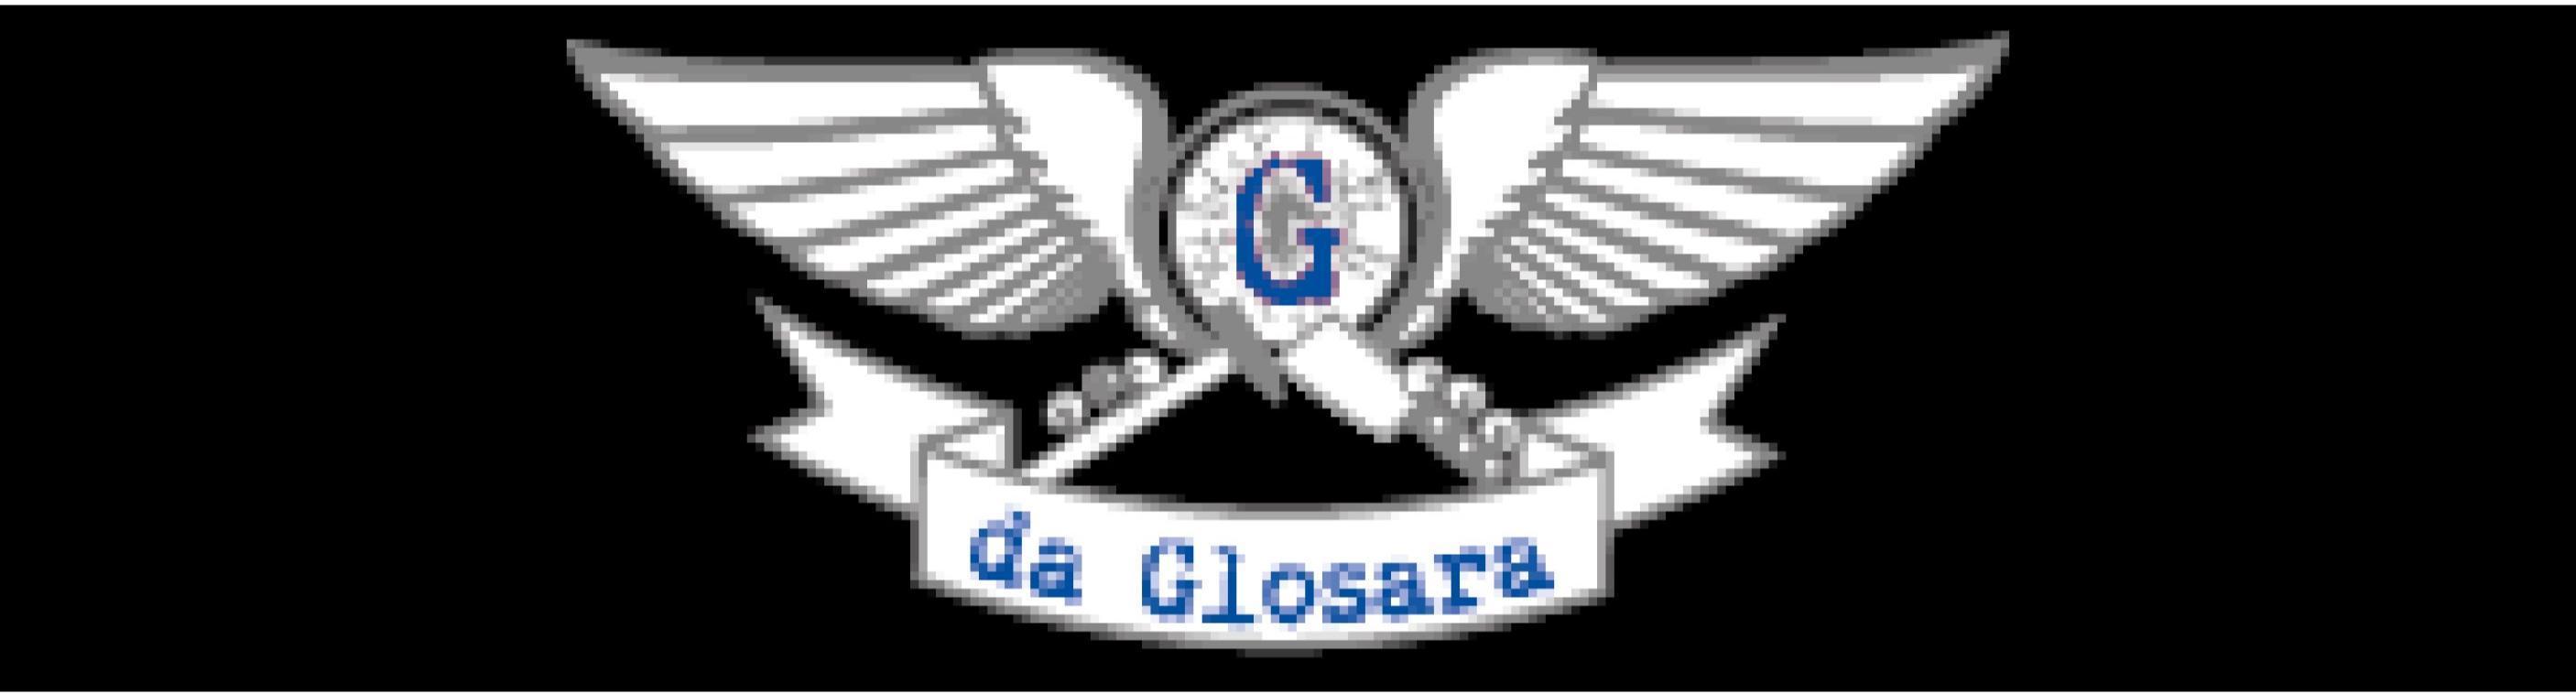 Logo Da Glosara - Glaserei Michael Kainberger